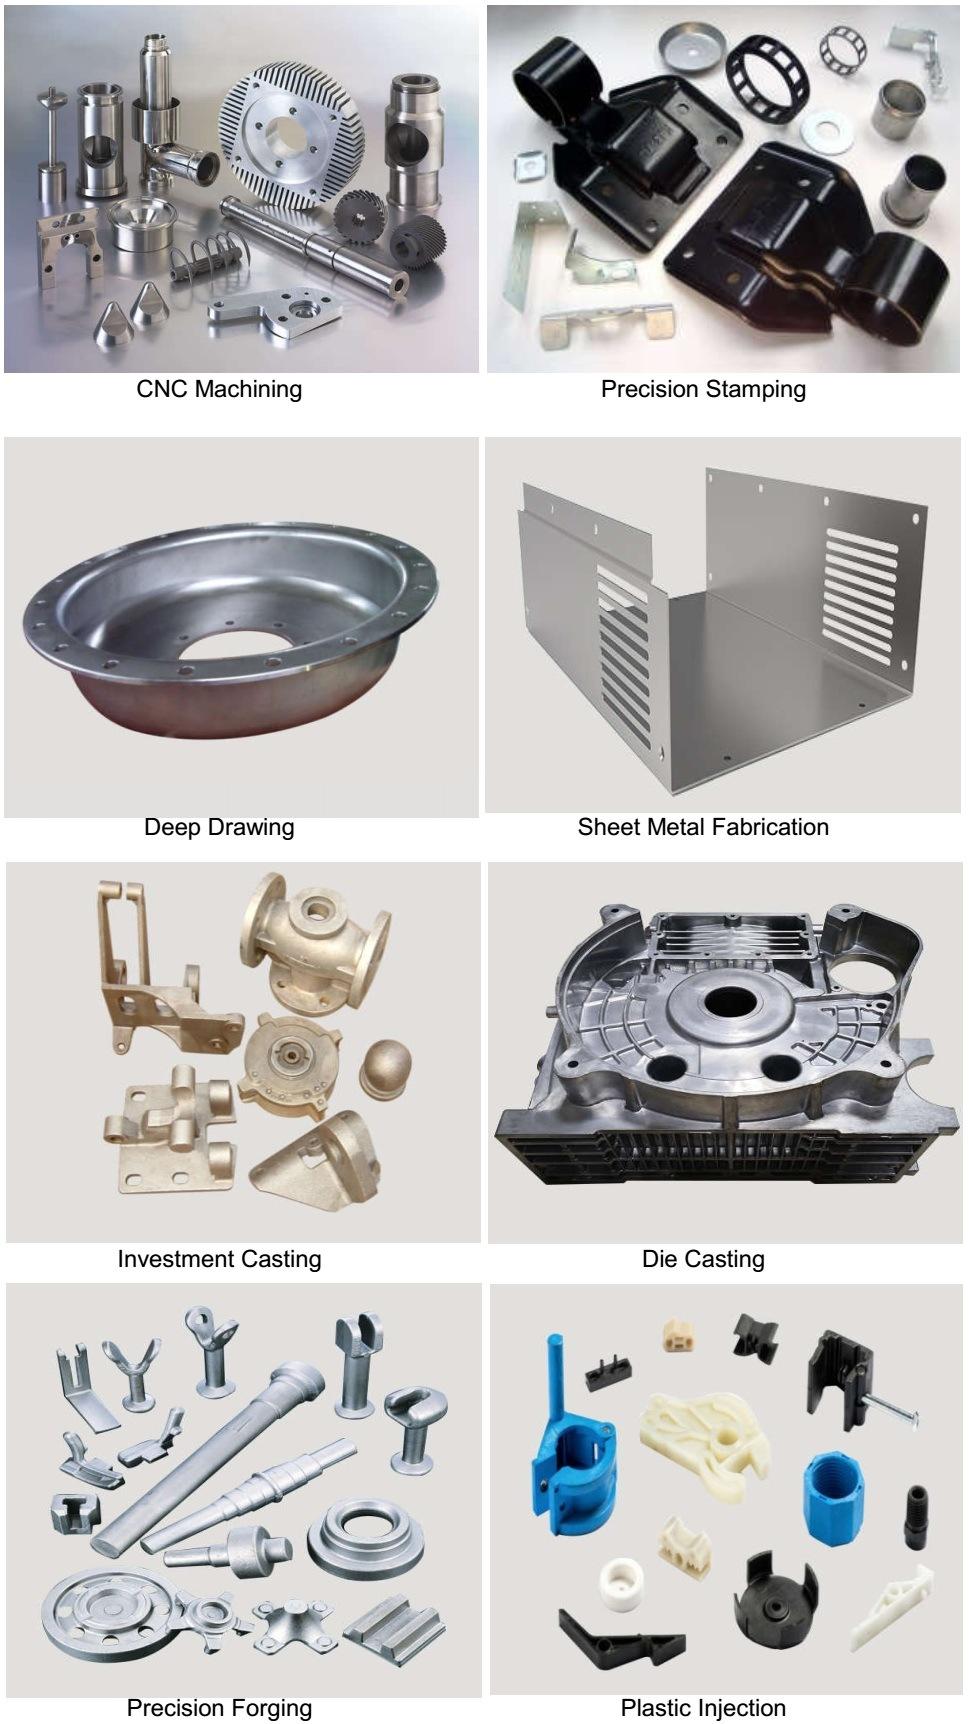 Customed Hydraulic Parts Metal Products CNC Hydraulic Manifold